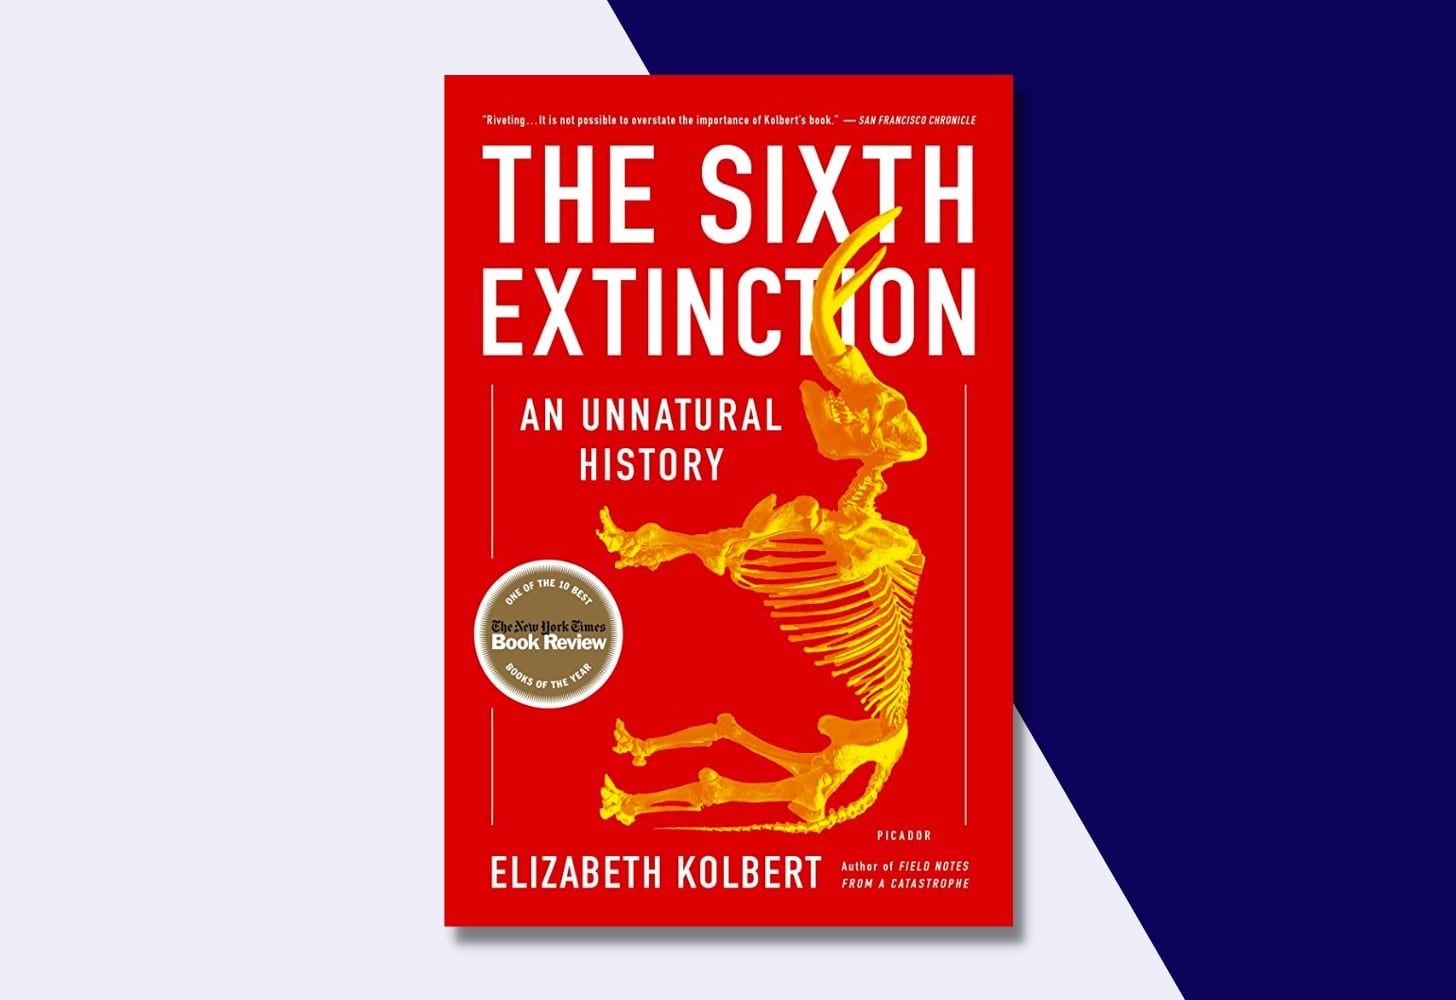 “The Sixth Extinction: An Unnatural History” by Elizabeth Kolbert